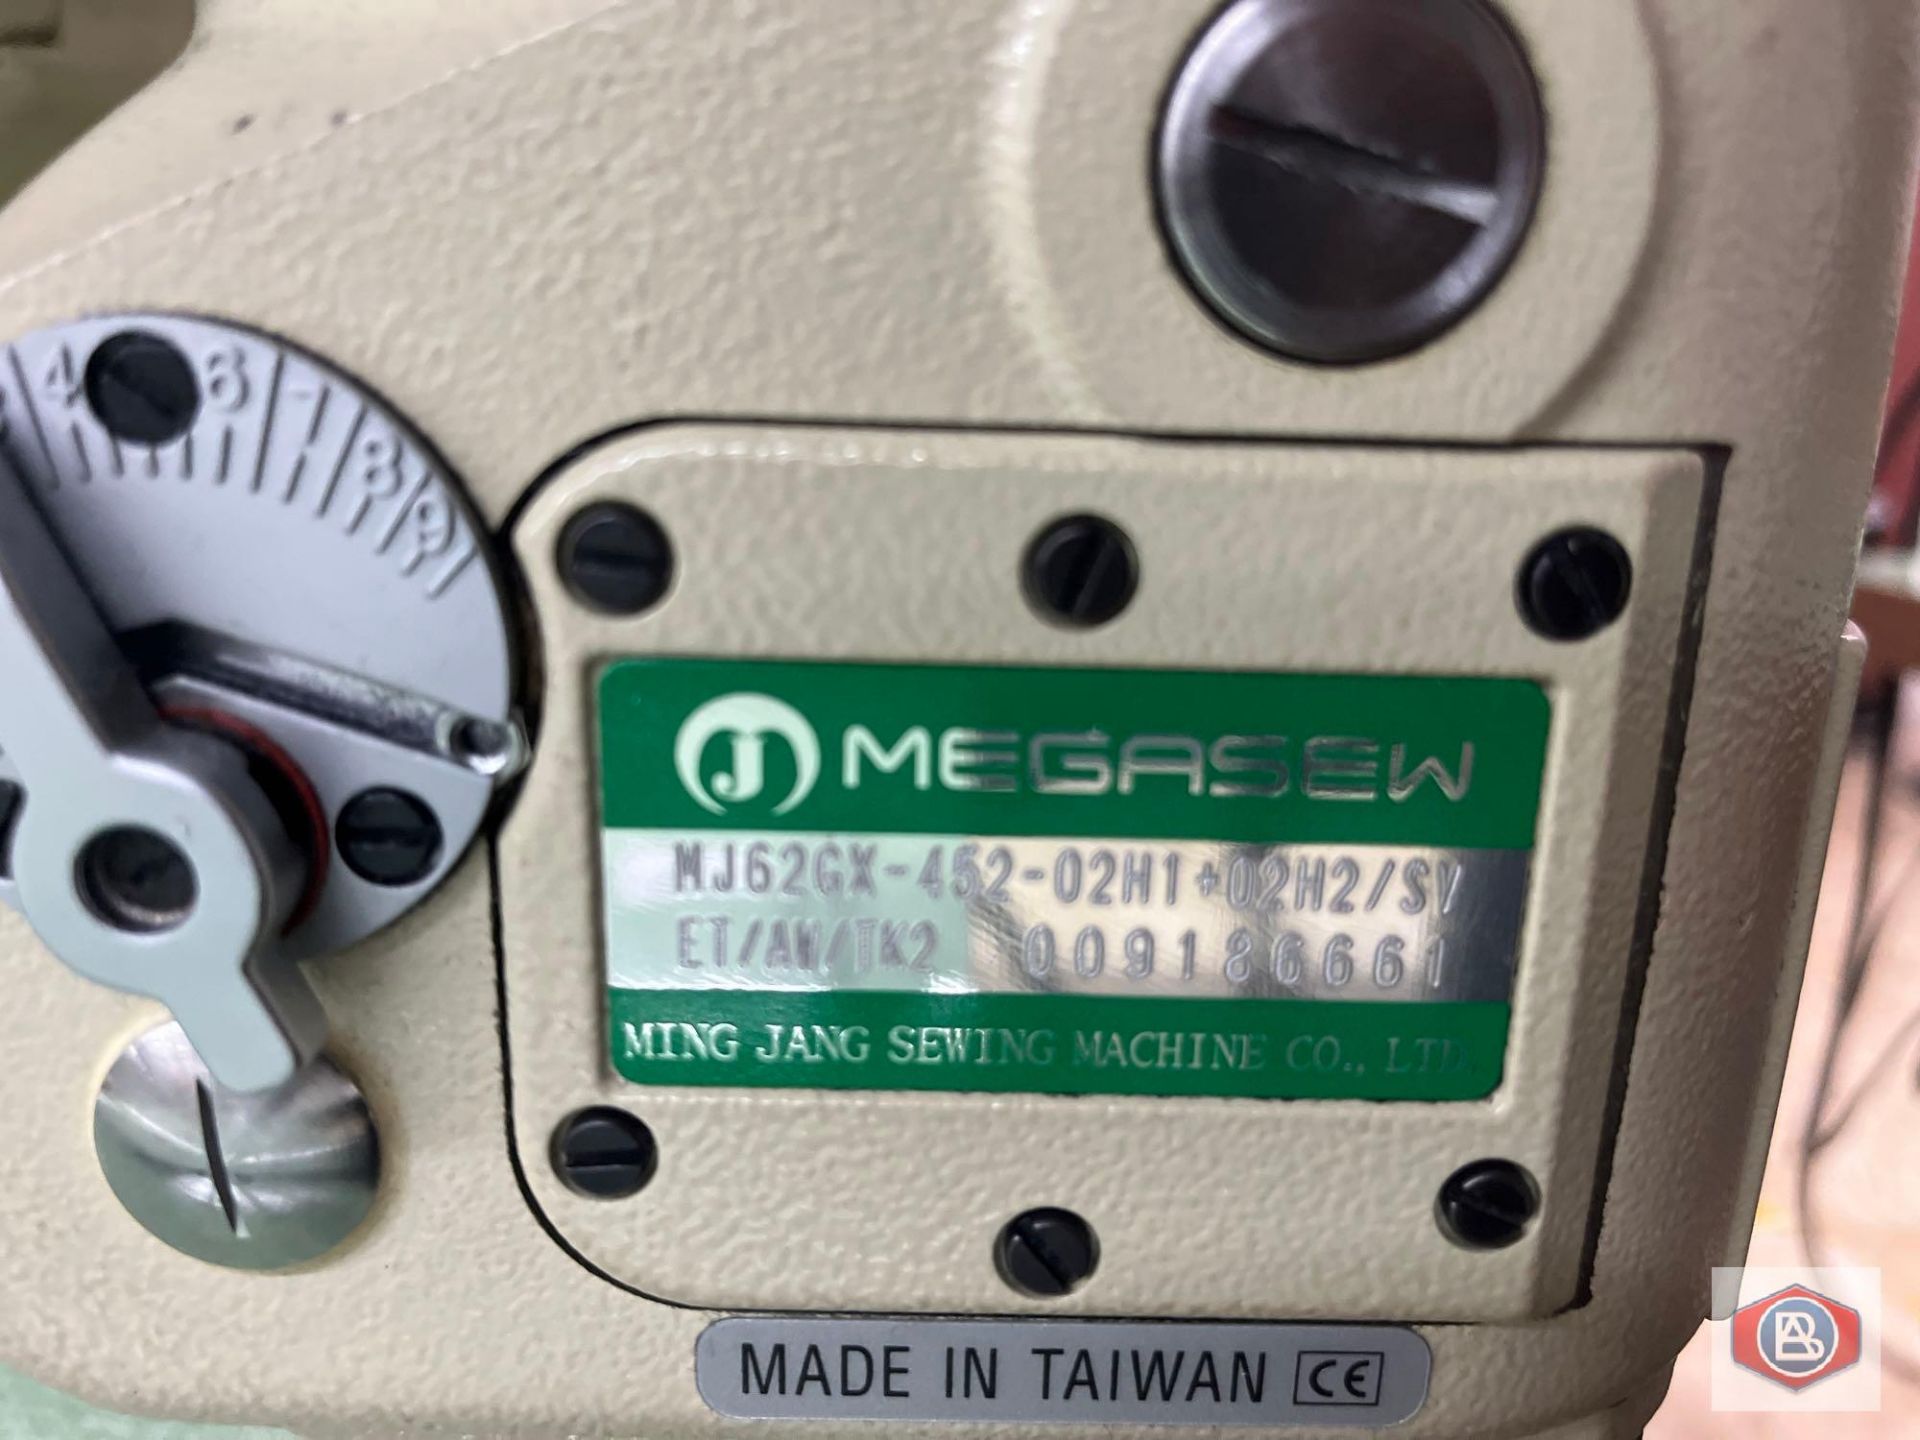 Megasew Sewing Machine - Image 3 of 6